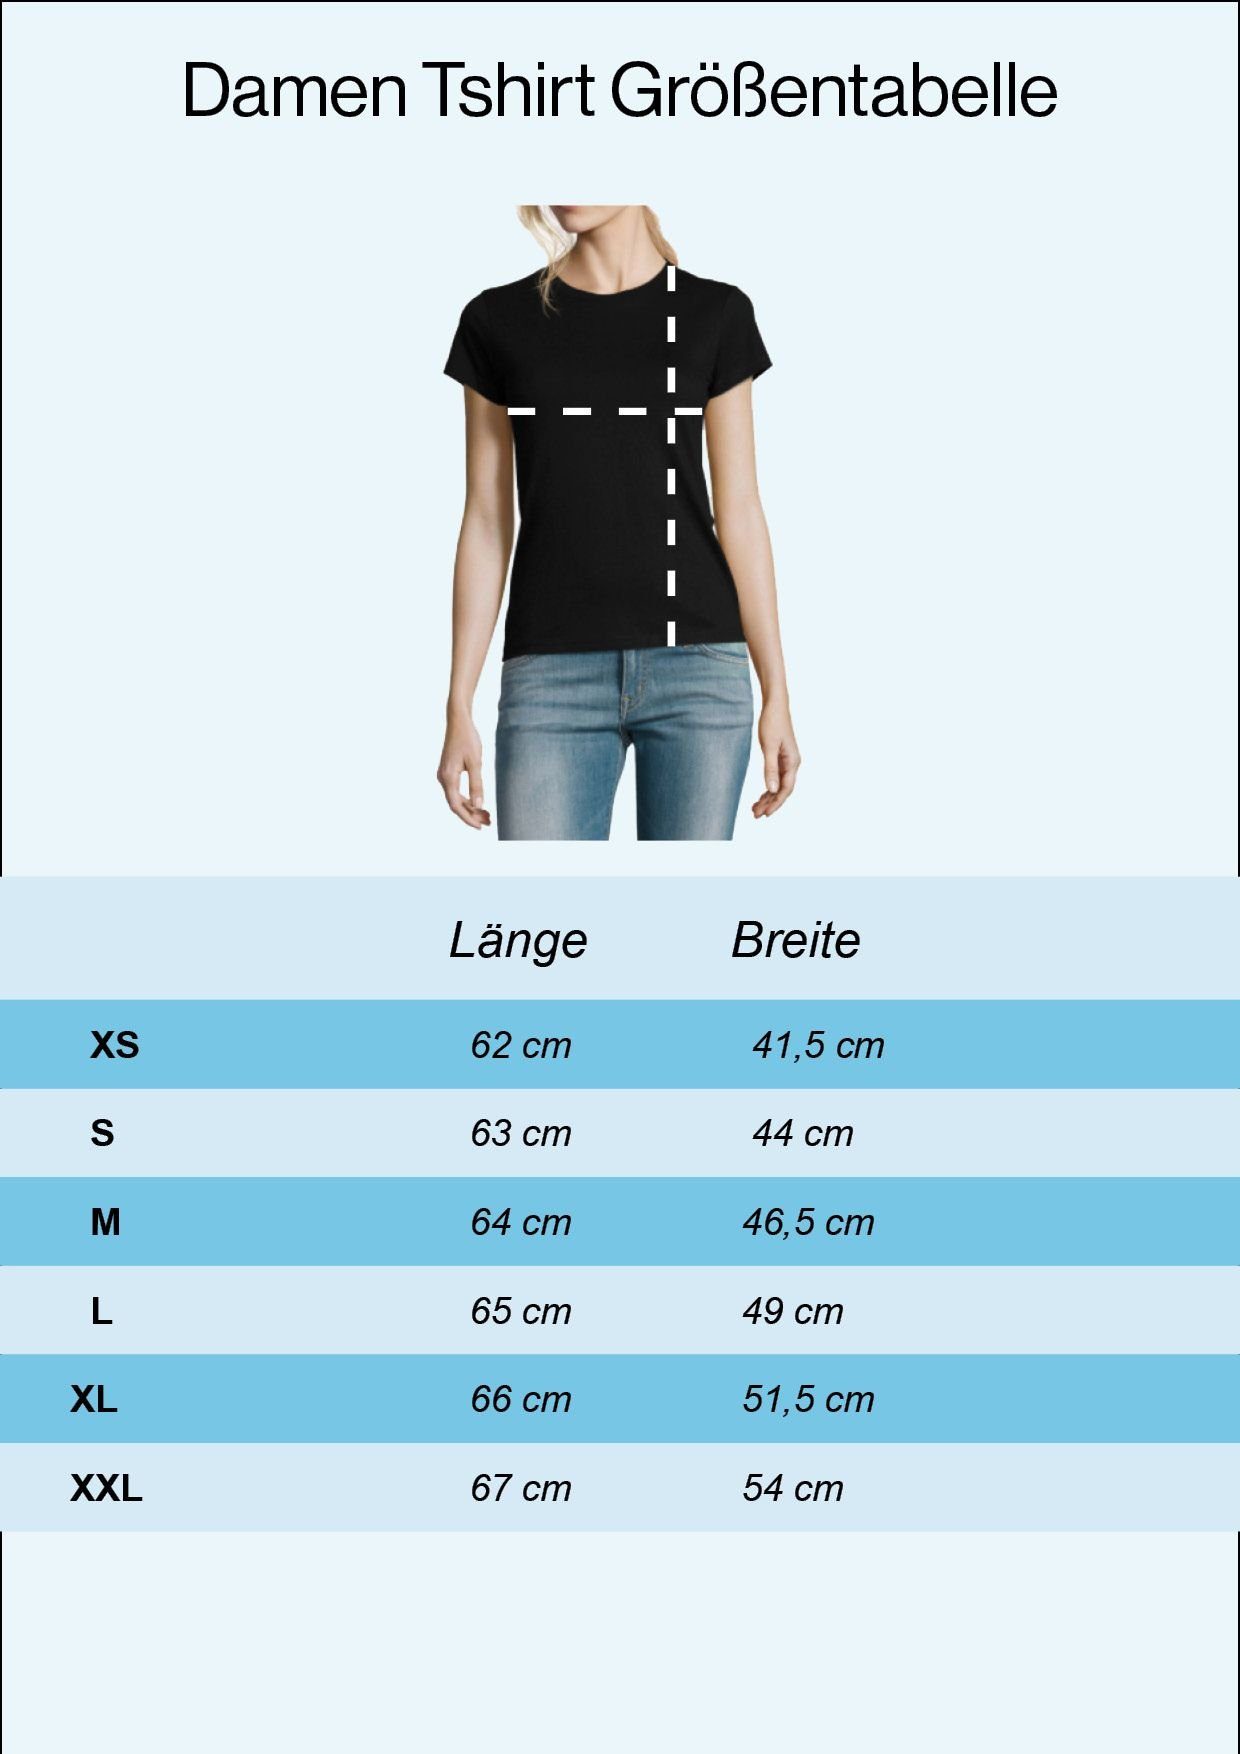 Youth Designz T-Shirt Logo XO T-Shirt Damen mit Schwarz trendigem